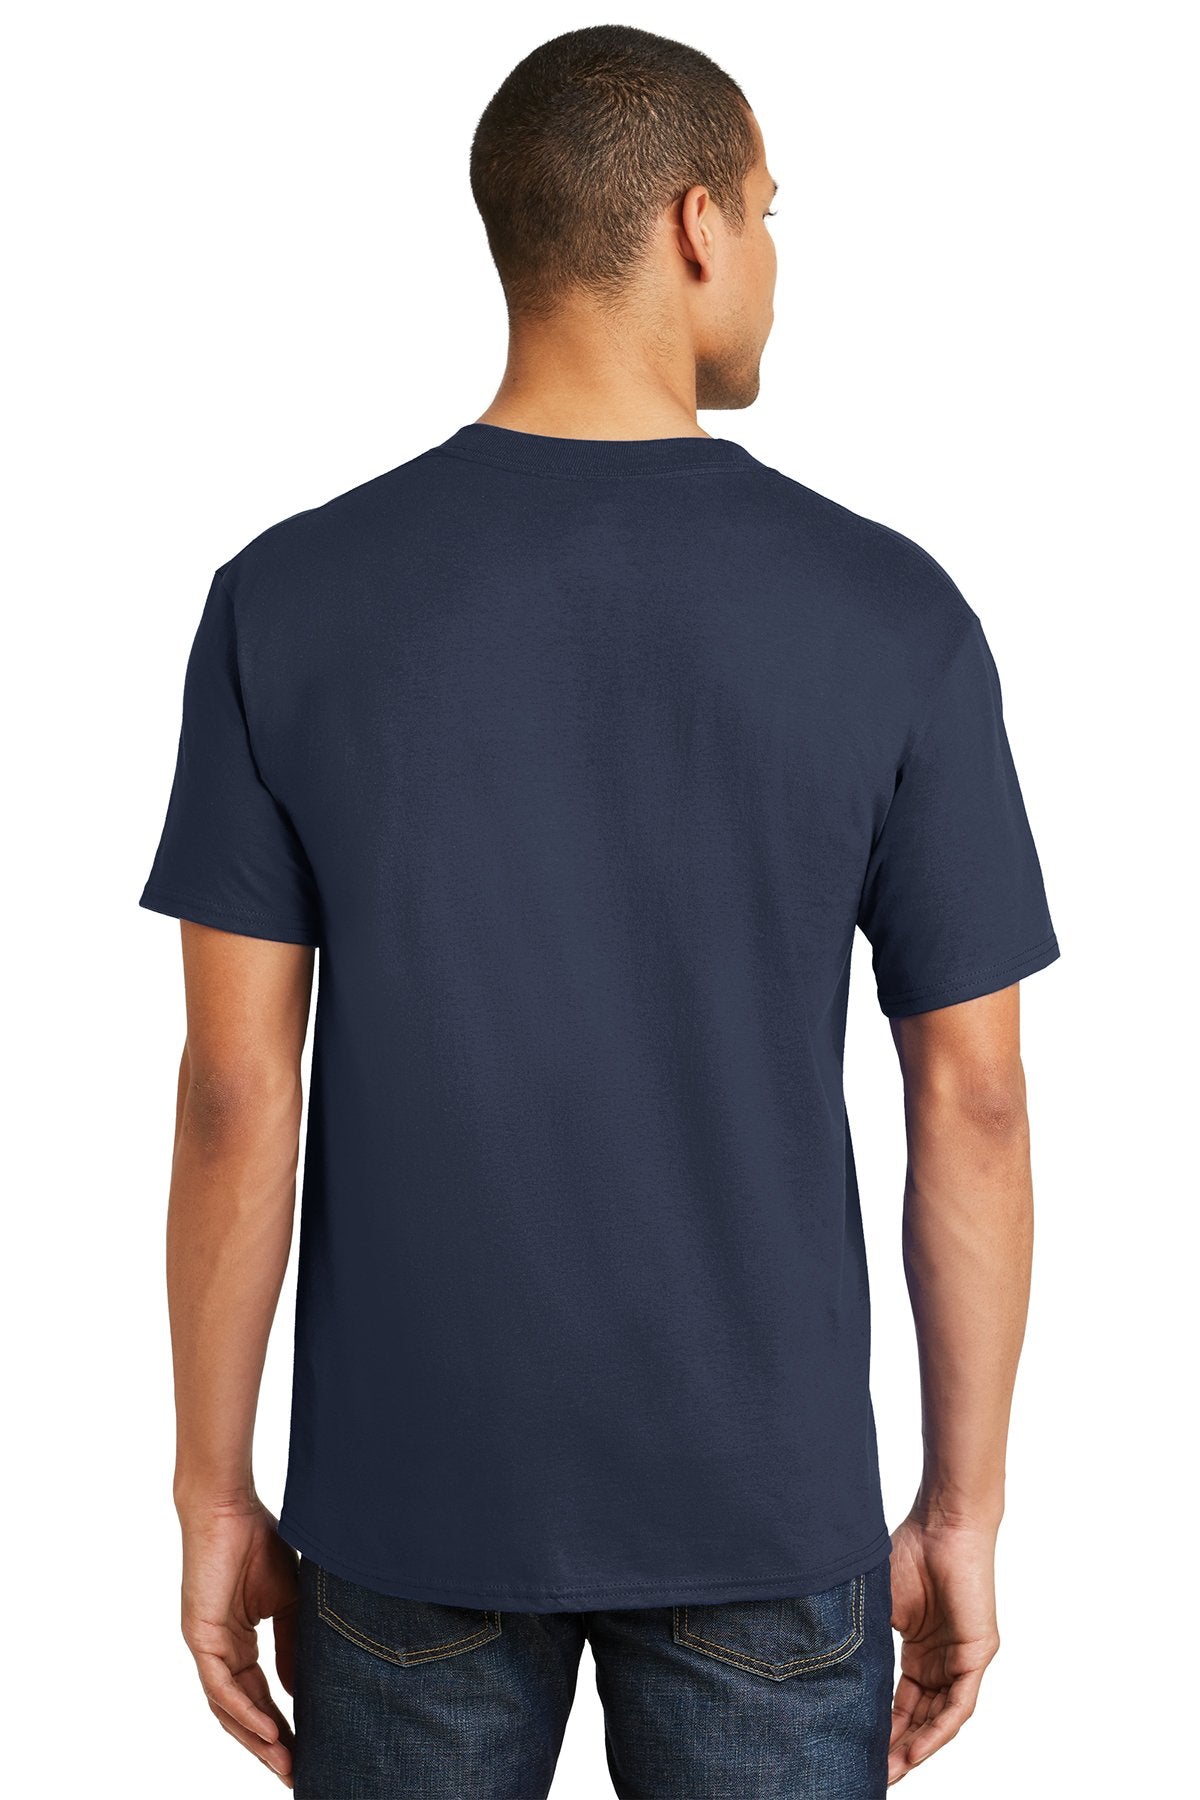 hanes beefy cotton t shirt 5180 navy